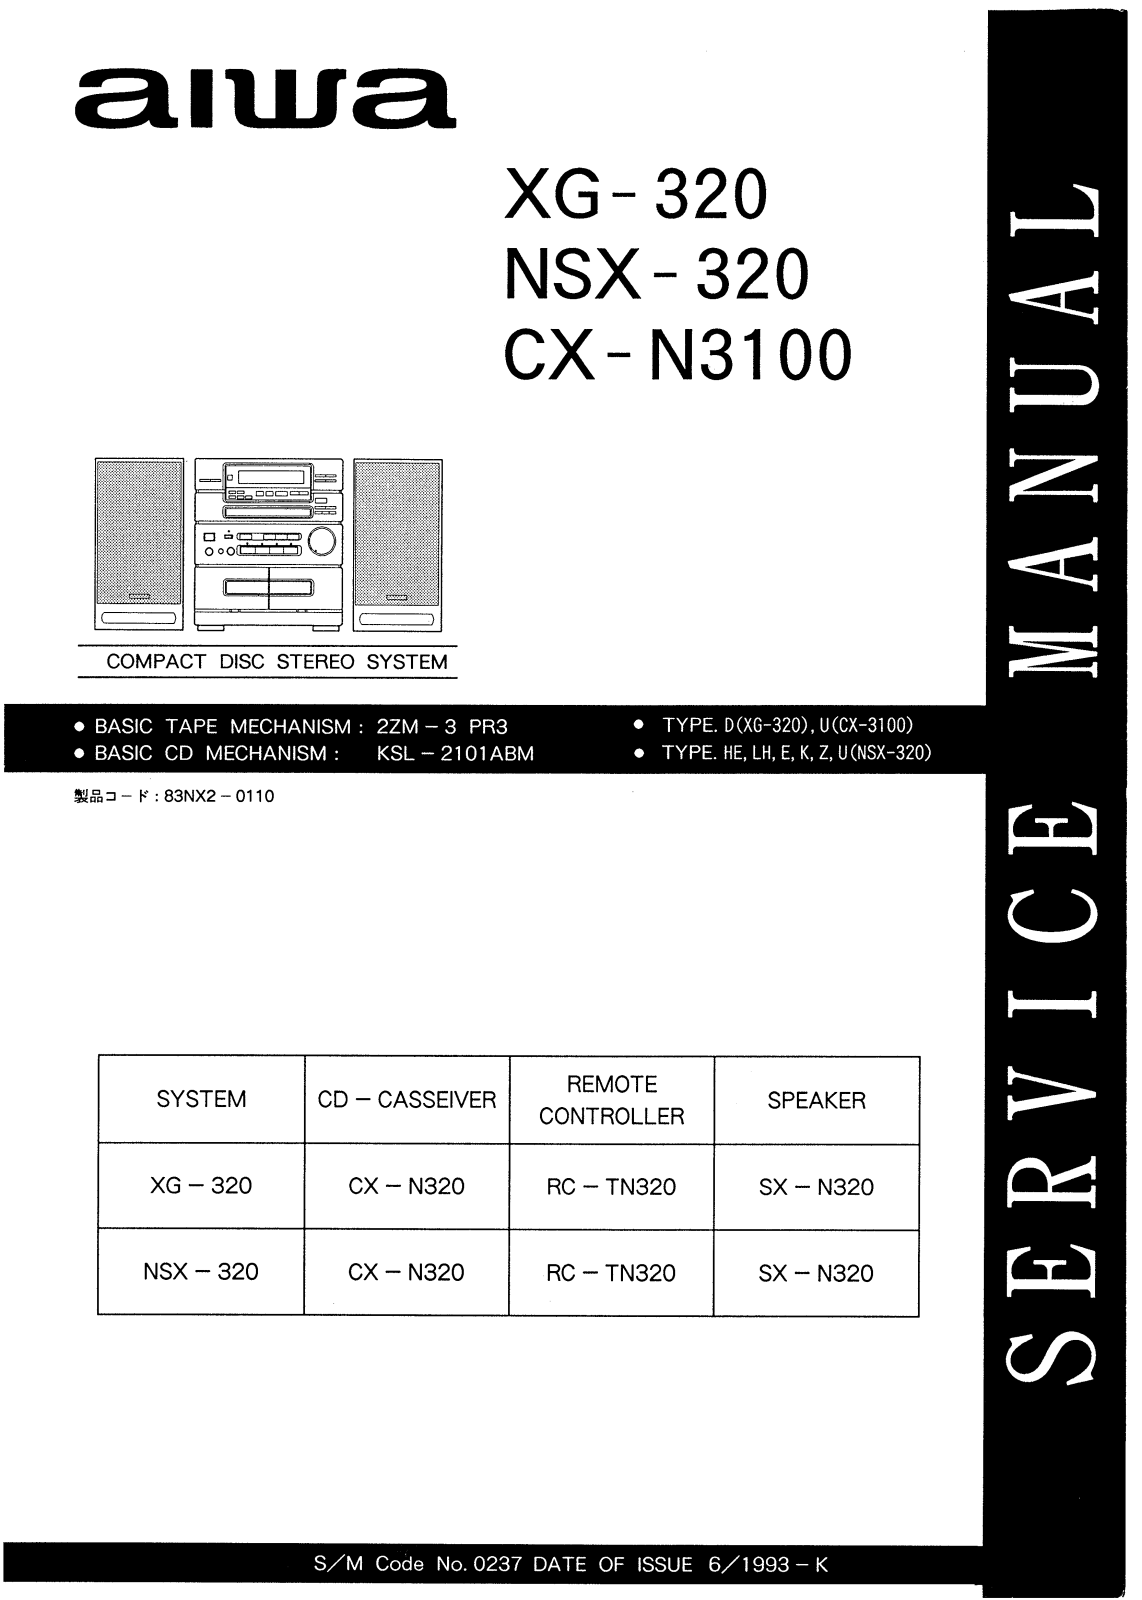 Aiwa XG-320, NSX-320, CX-N3100 Service Manual